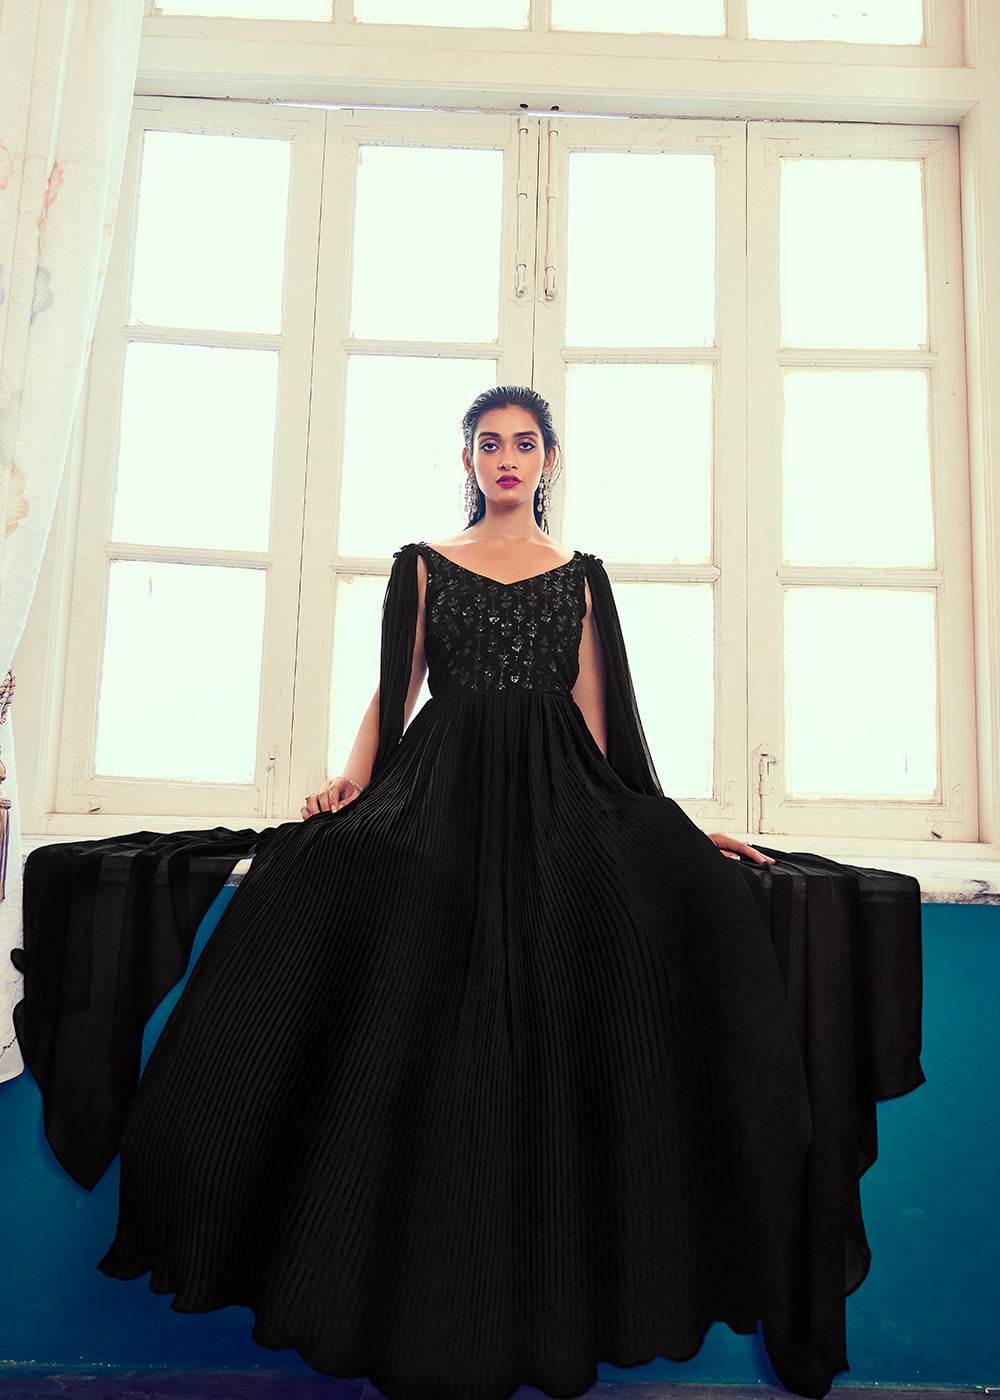 Mesmeric Black Colored Designer Partywear Silk Jacquard Gown